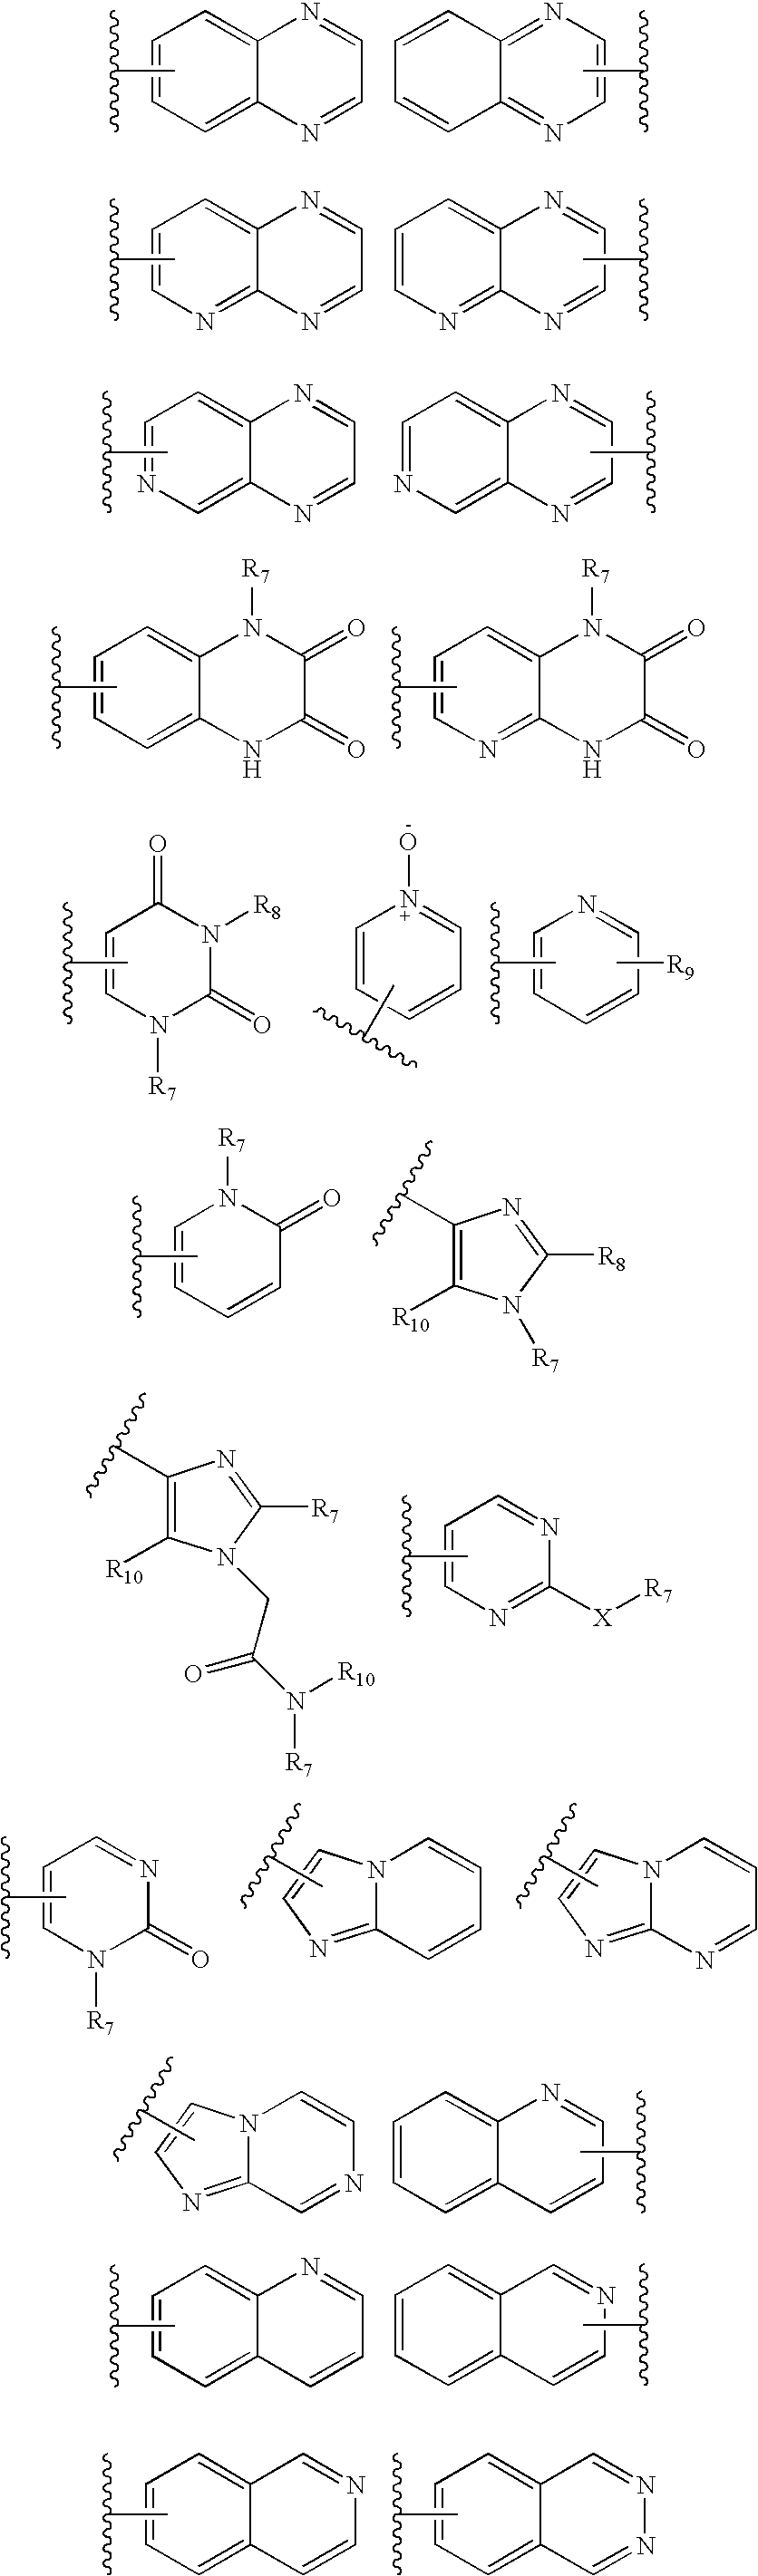 7-Substituted imidazo[4,5-c]pyridine antagonists of gonadotropin releasing hormone receptor